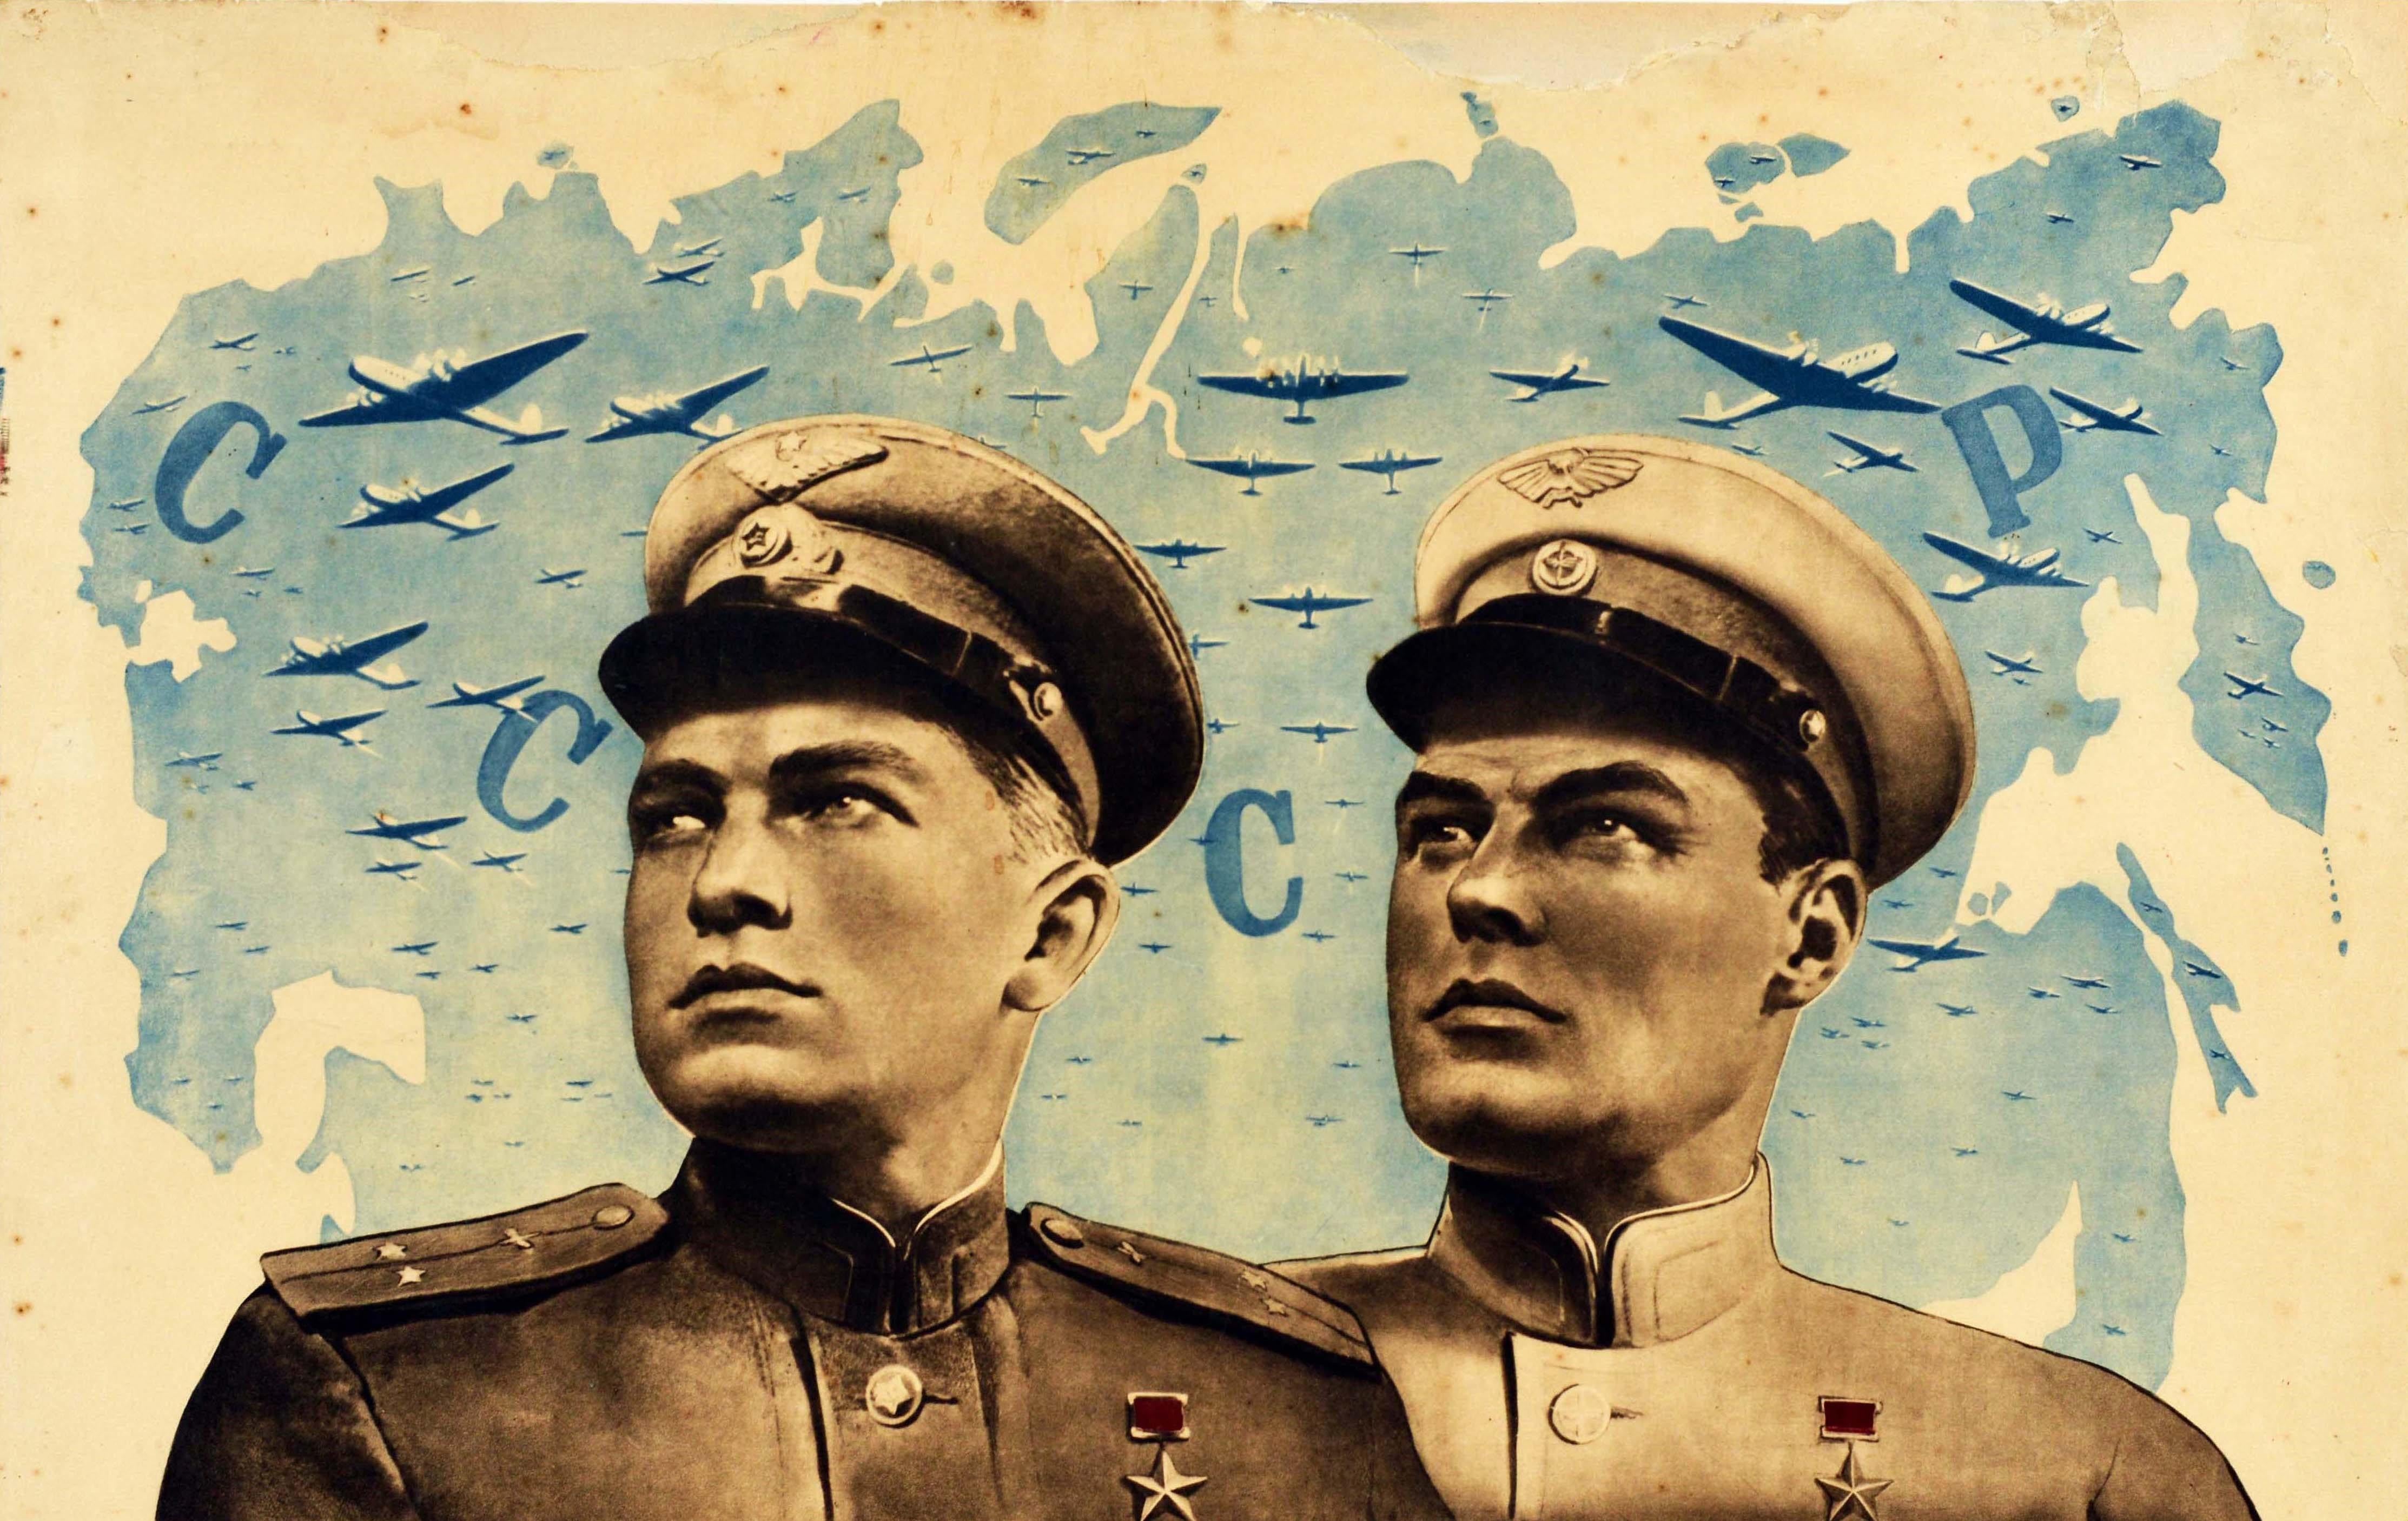 Original Vintage Poster Soviet Hero Pilots Loyal Sons Of Homeland USSR Air Force - Print by Koretsky Gitsevich